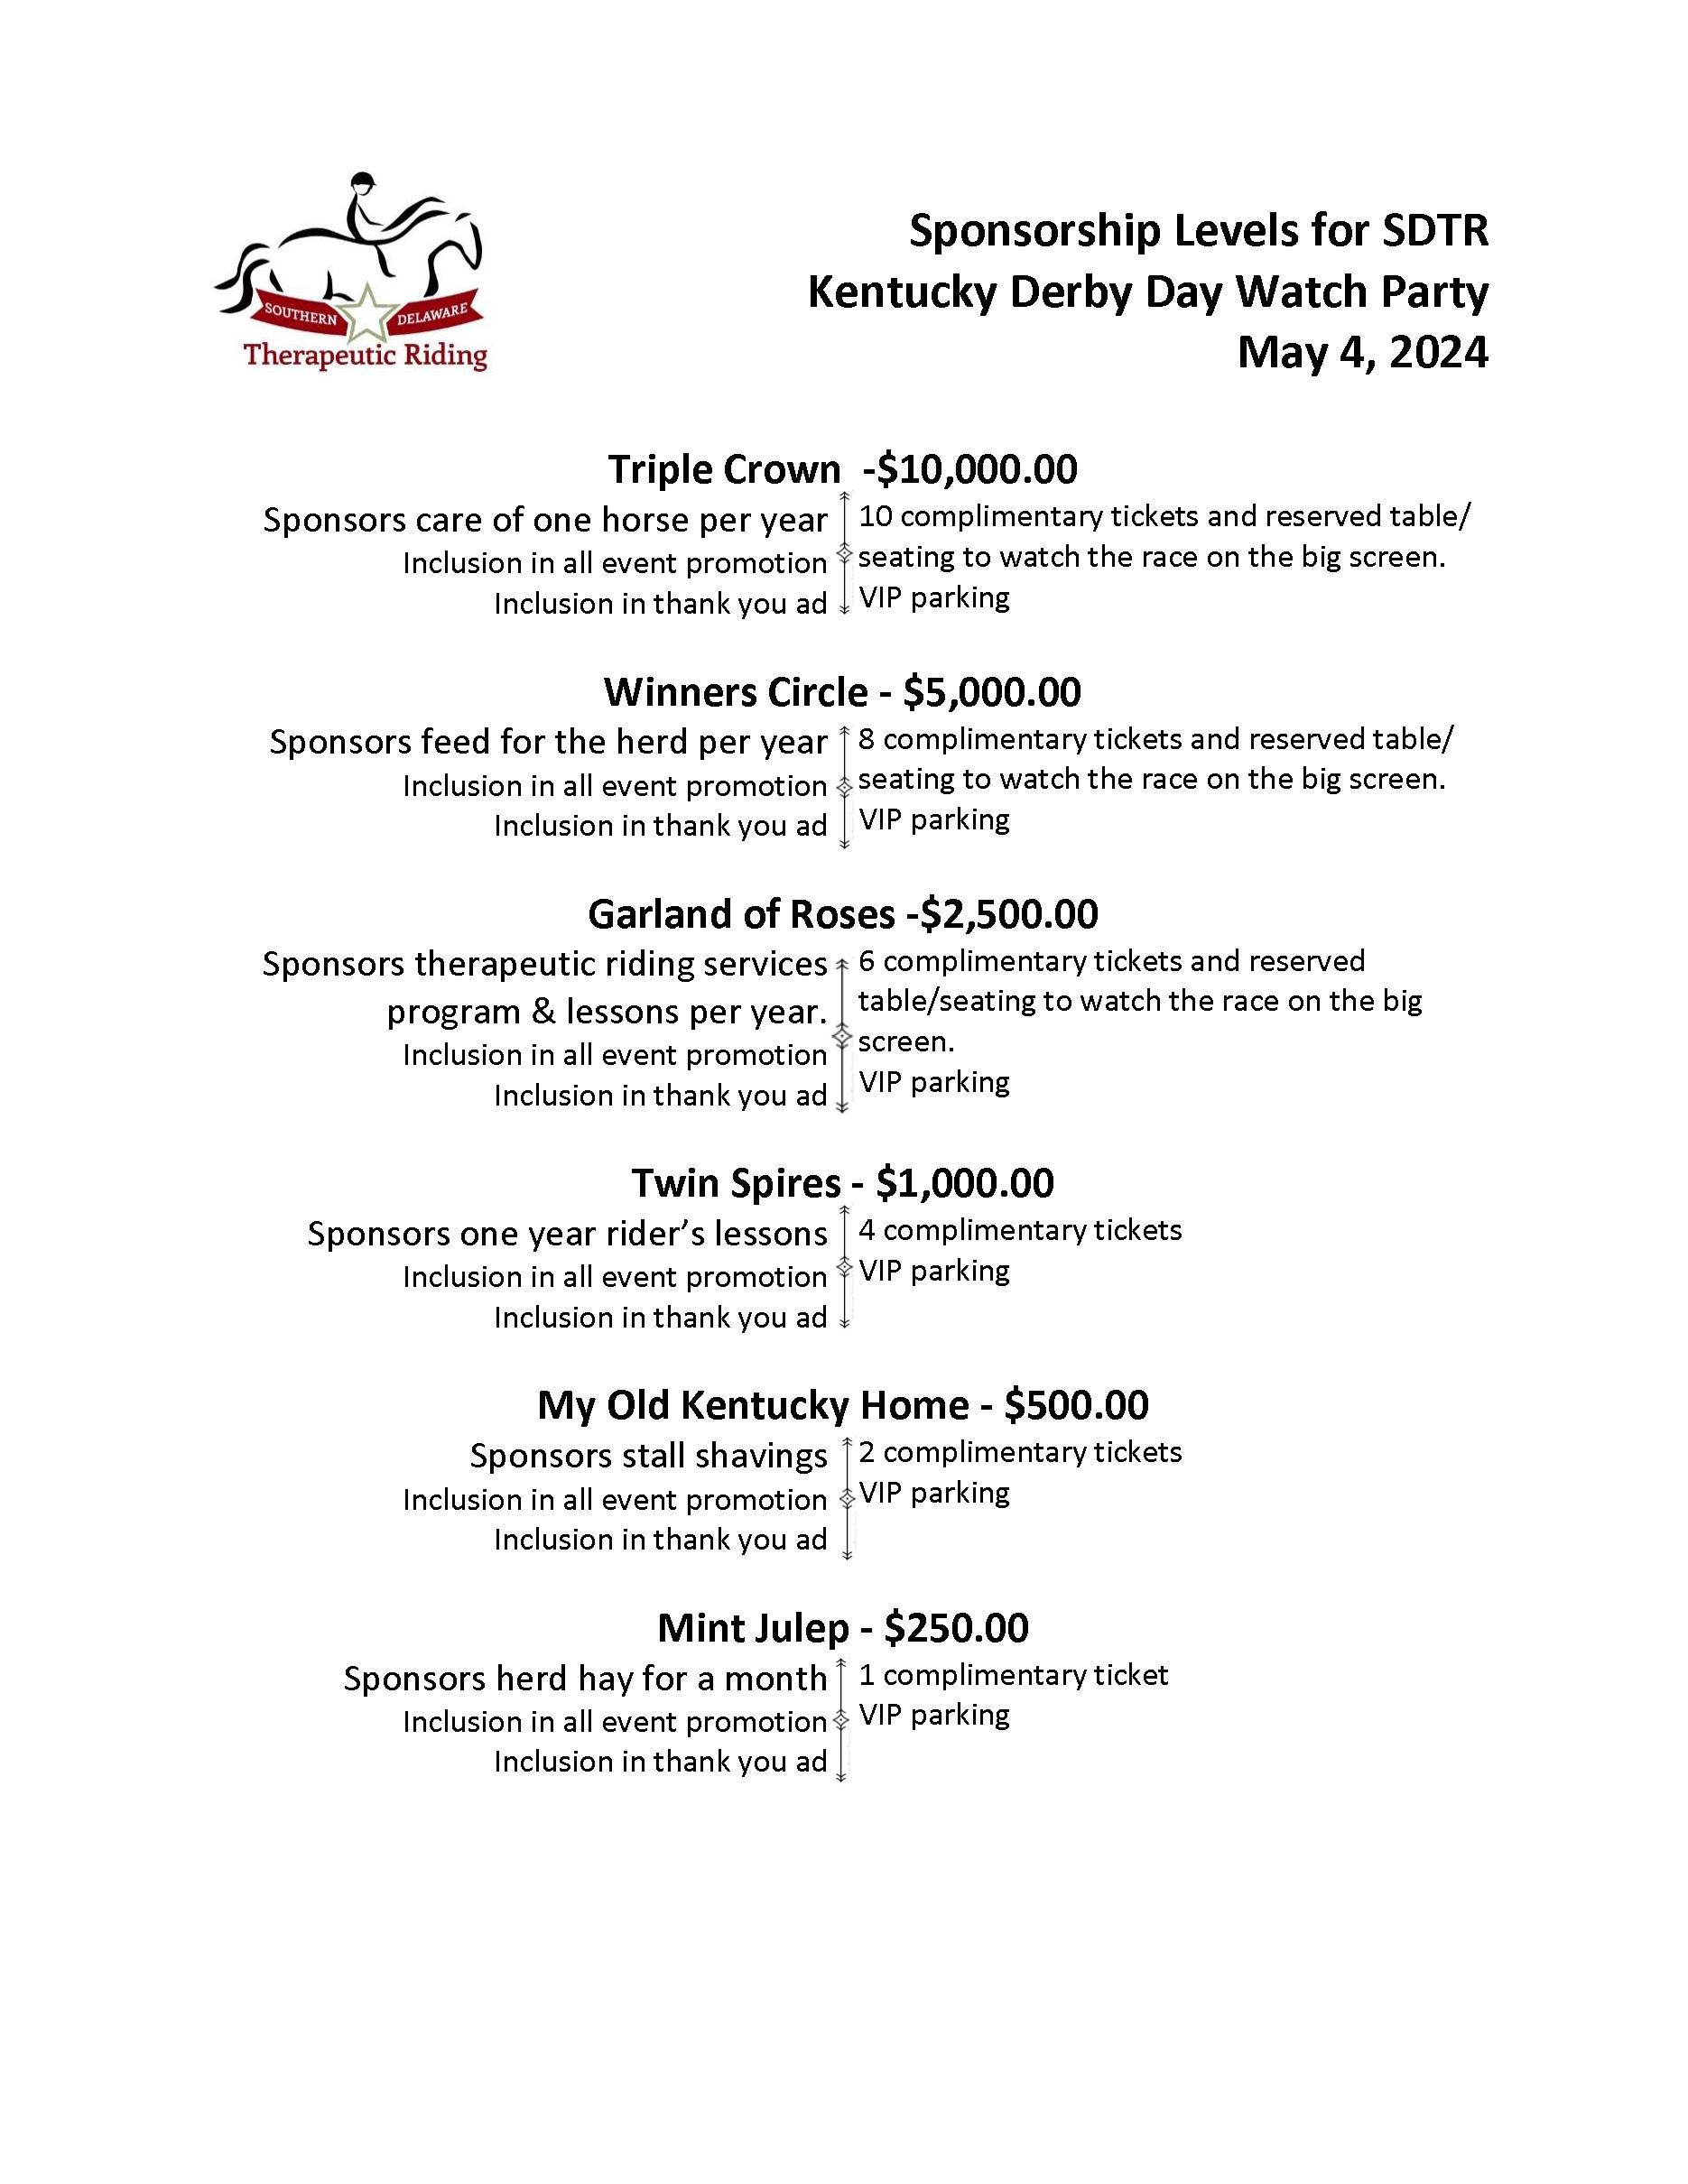 Kentucky Derby Day Sponsorship Levels .2024